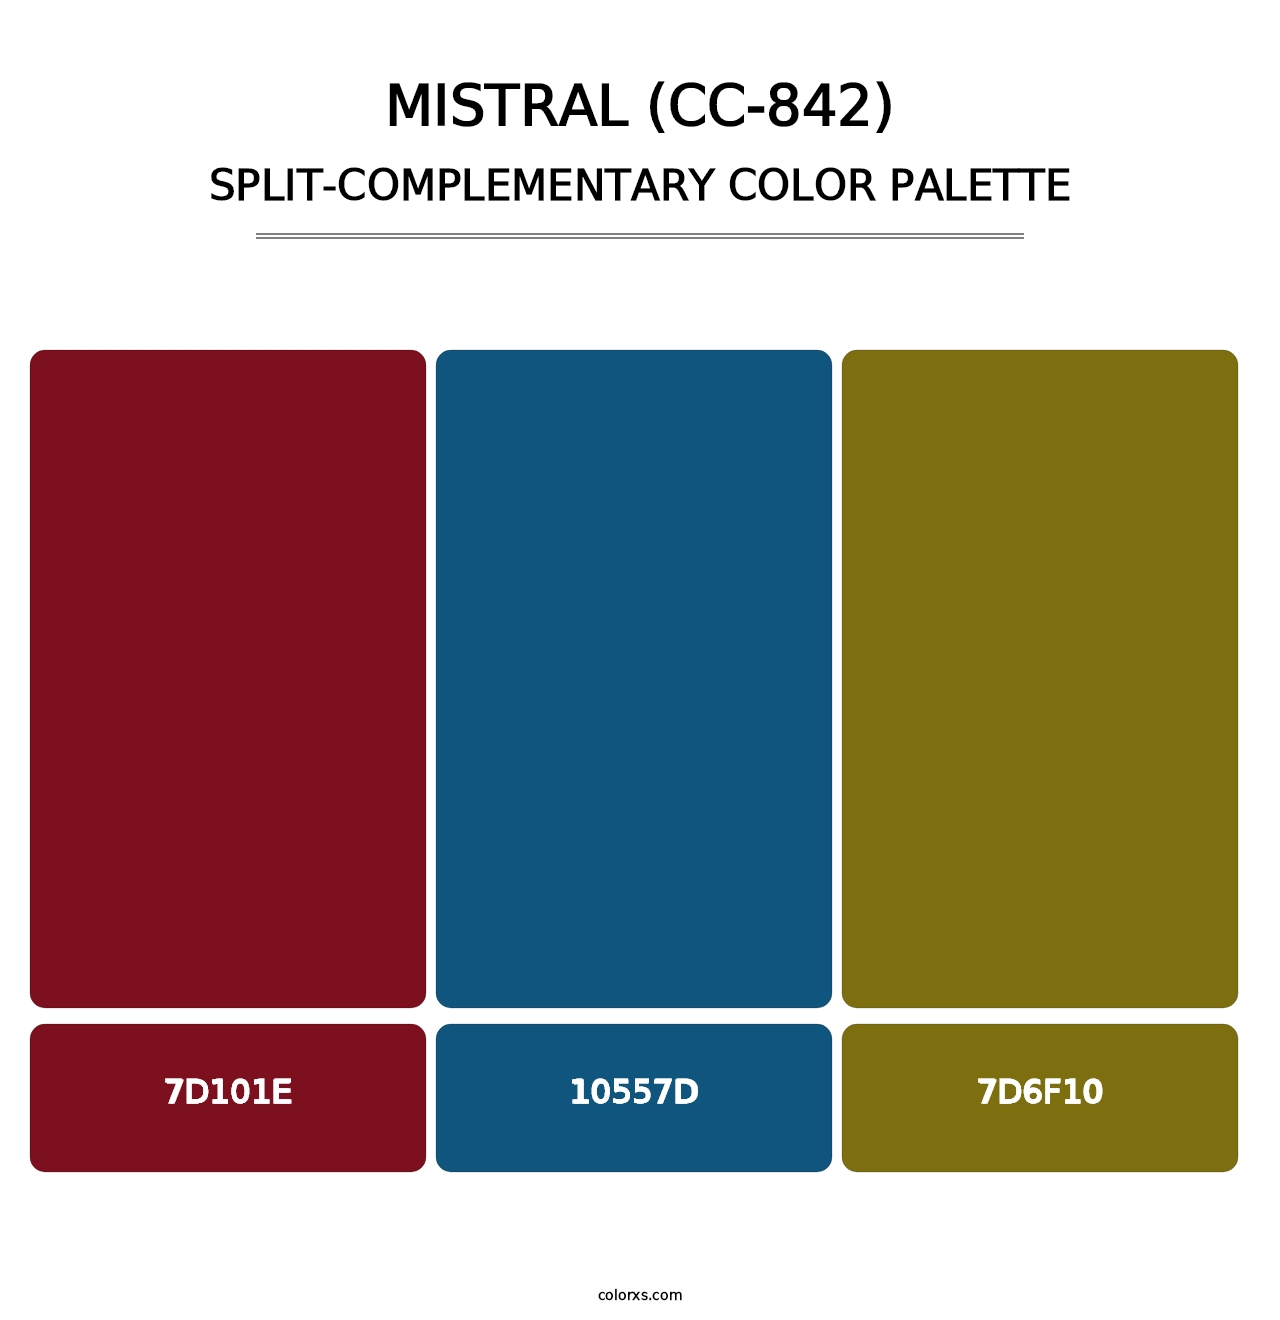 Mistral (CC-842) - Split-Complementary Color Palette